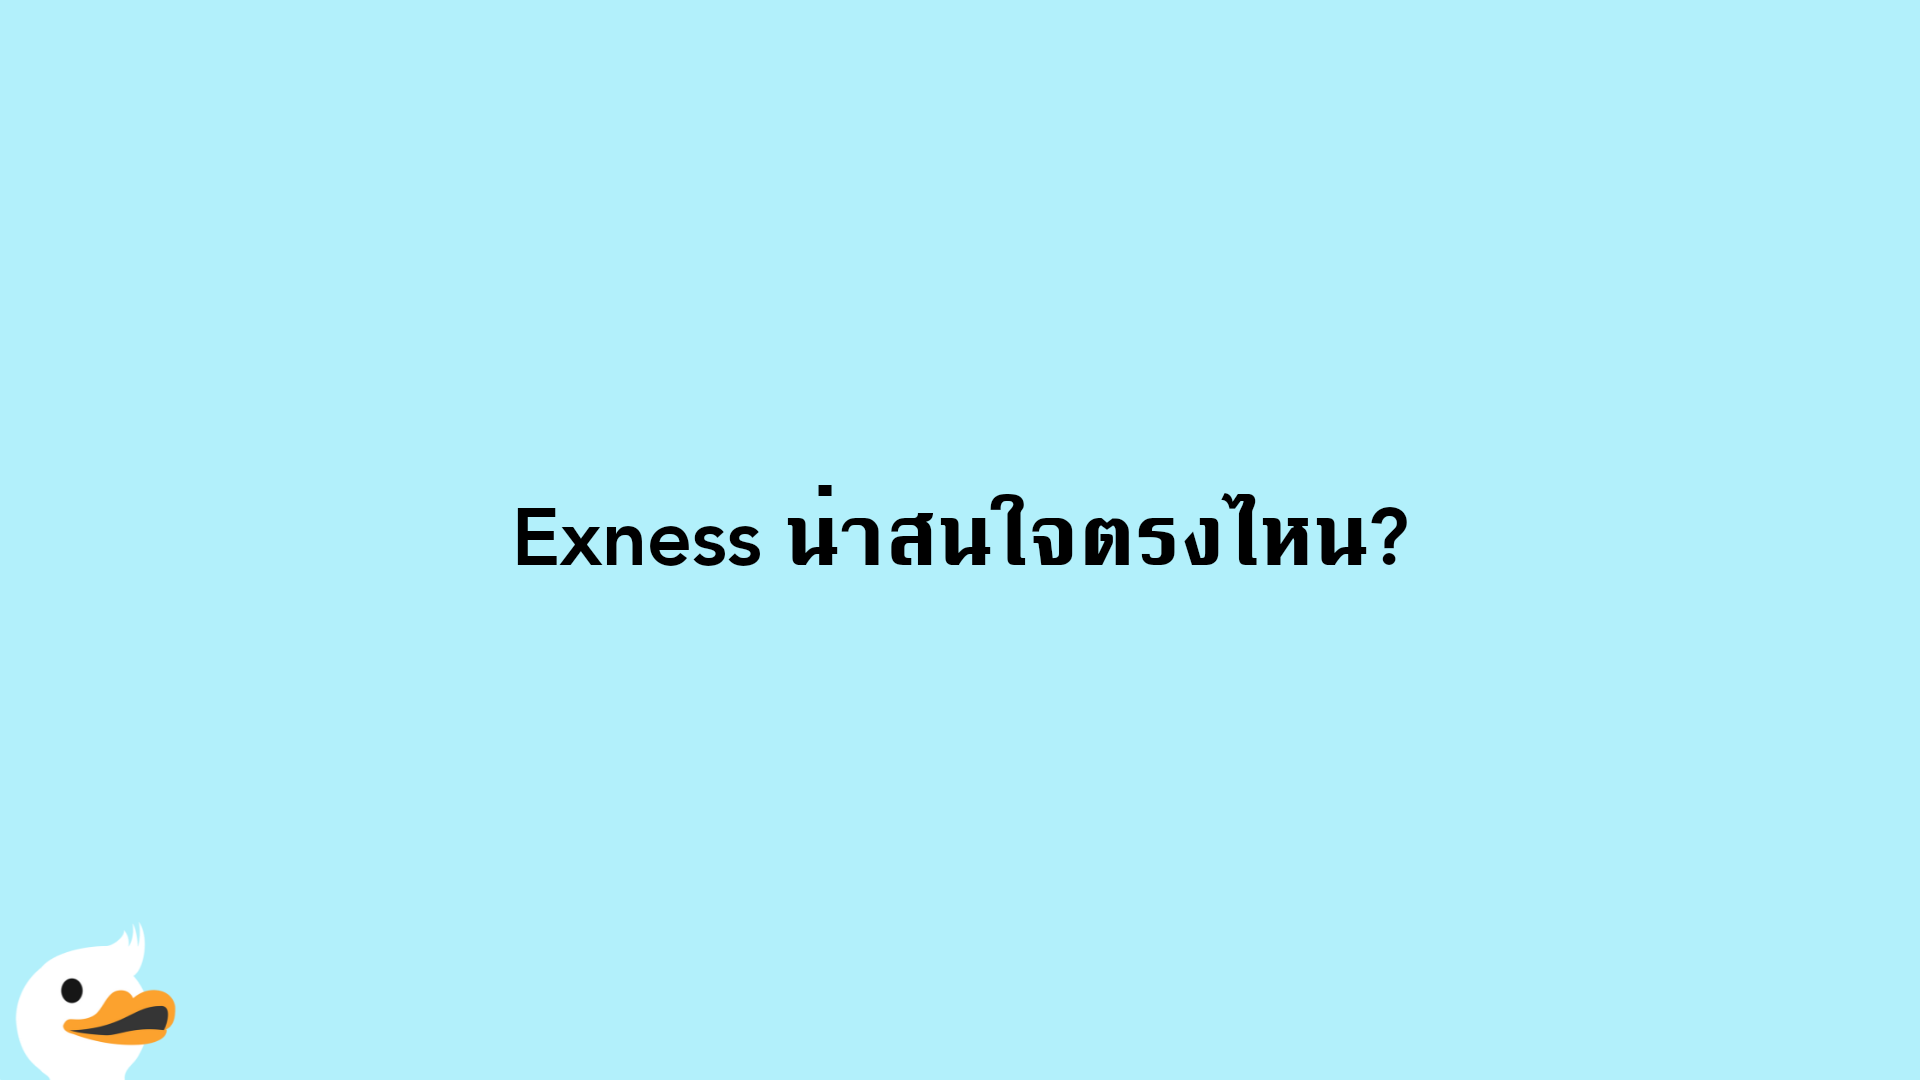 Exness น่าสนใจตรงไหน?